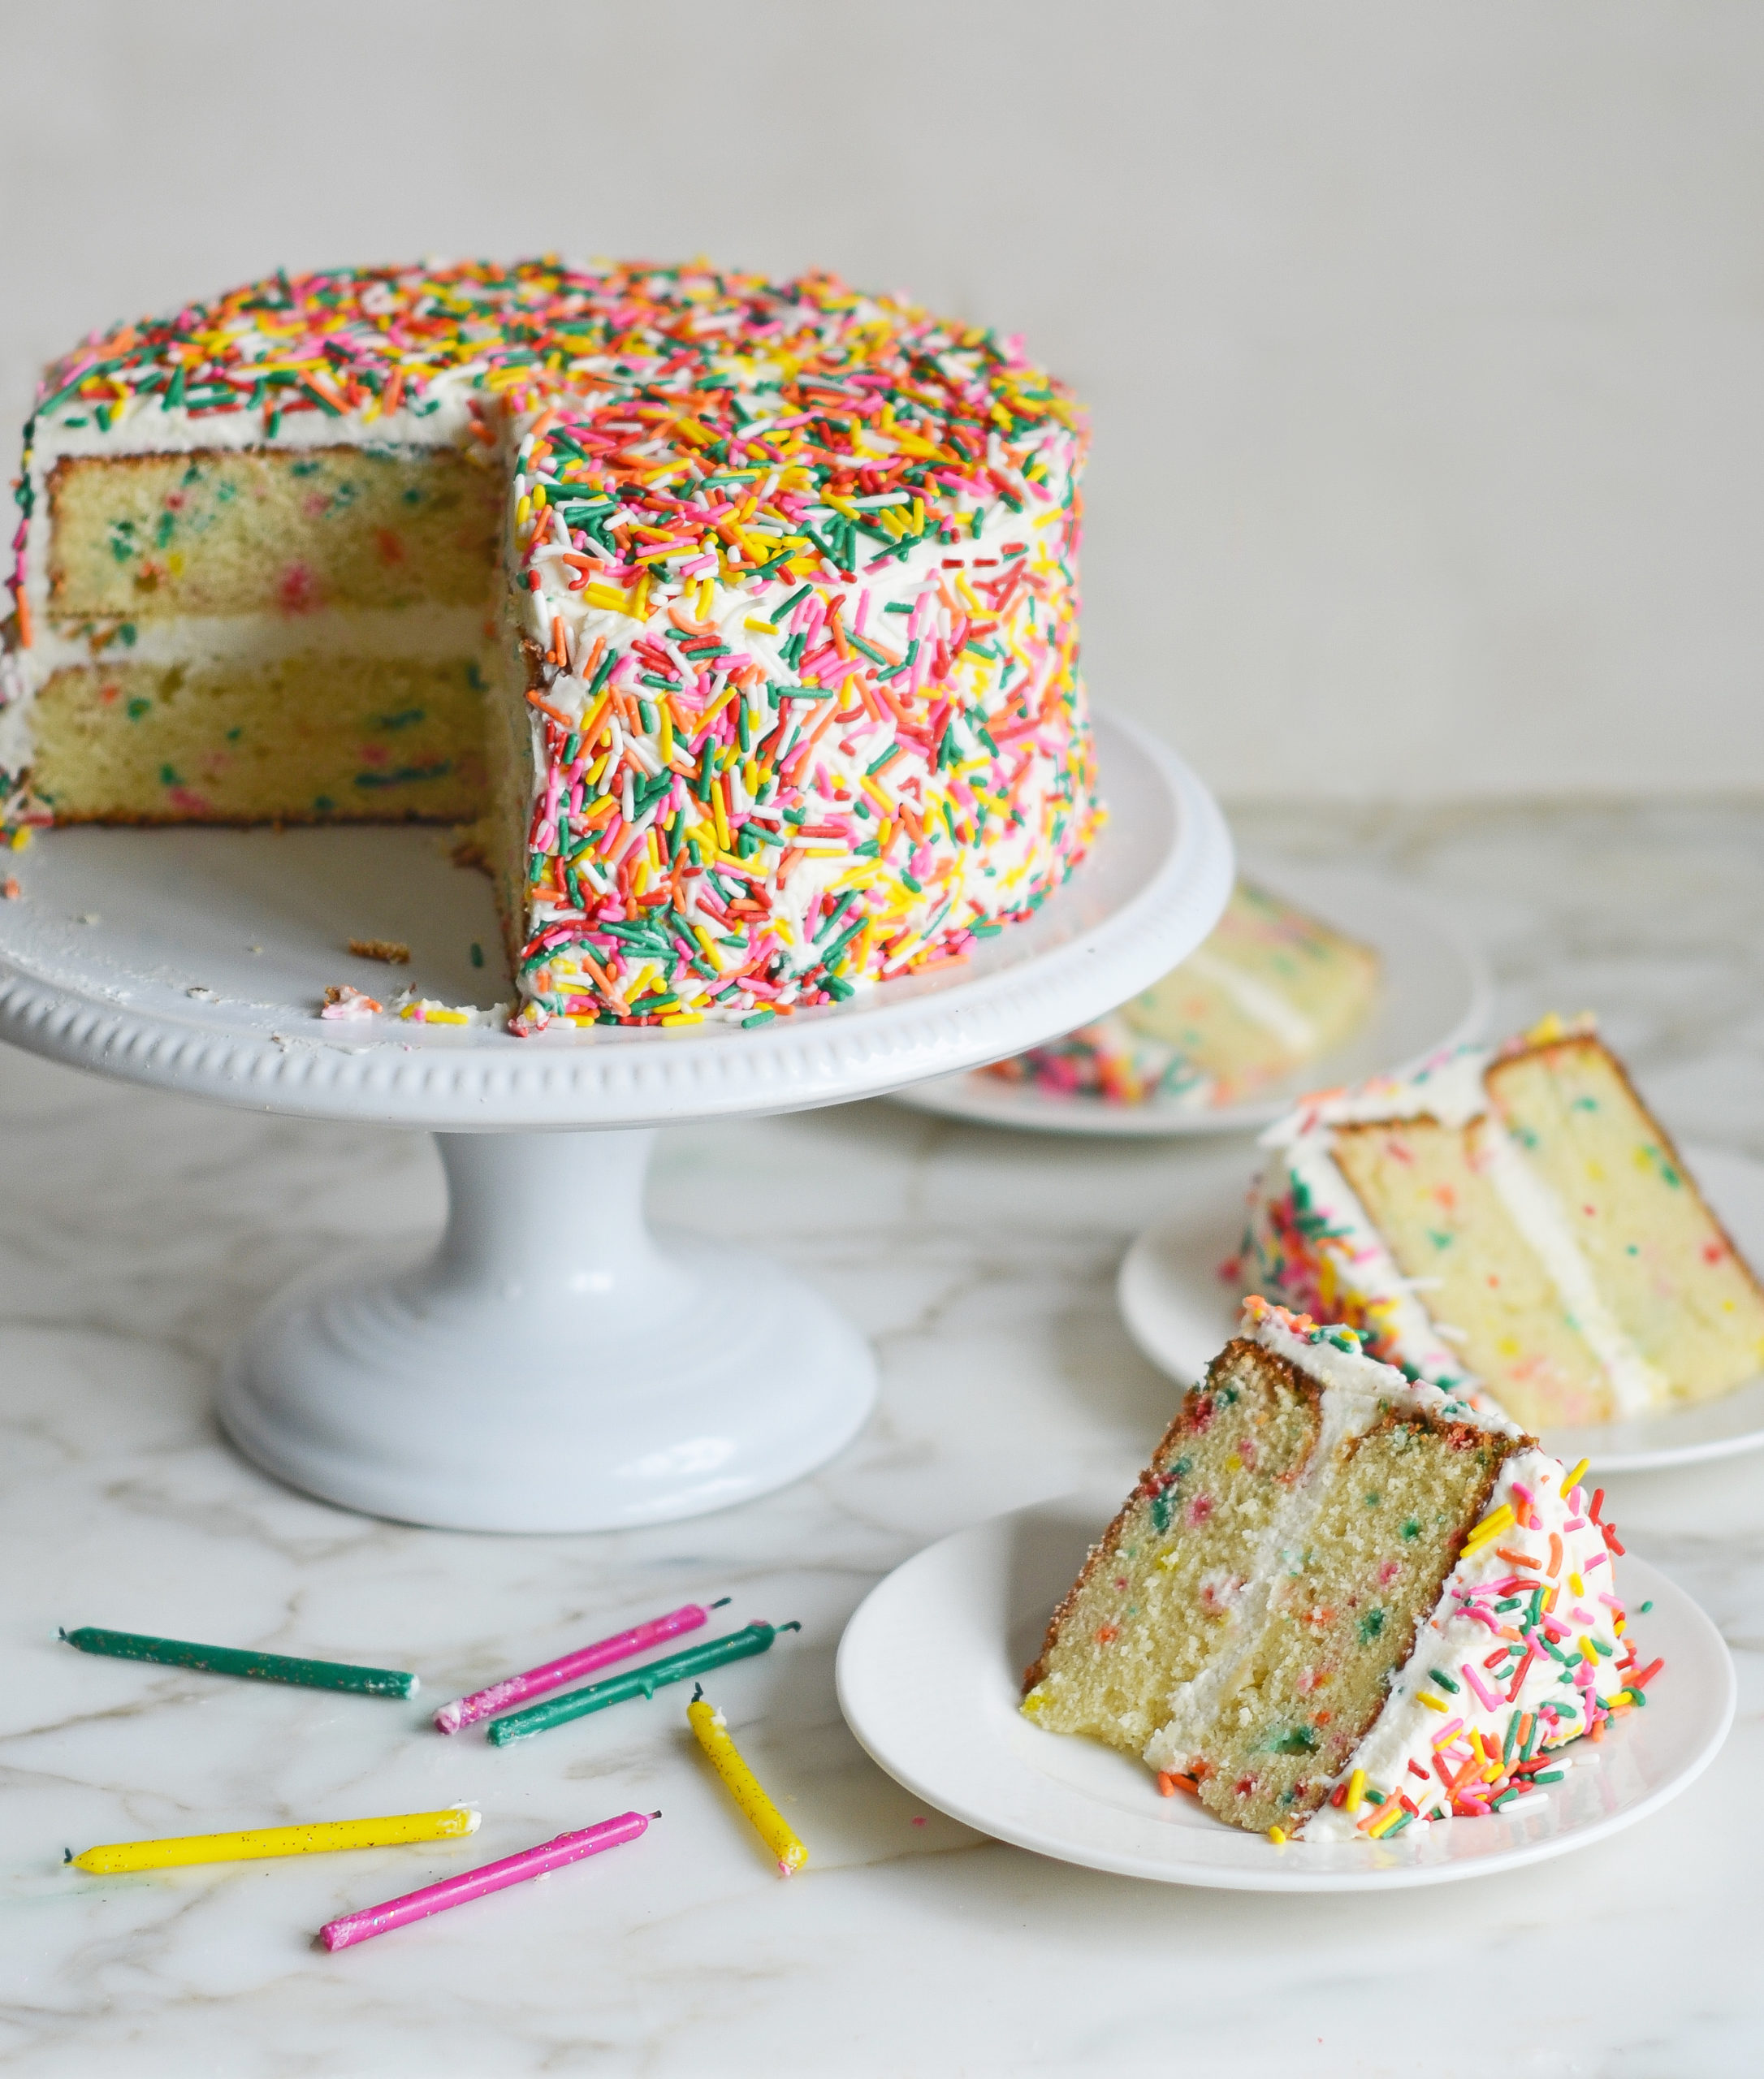 https://www.onceuponachef.com/images/2020/09/Sprinkle-Funfetti-Cake-scaled.jpg